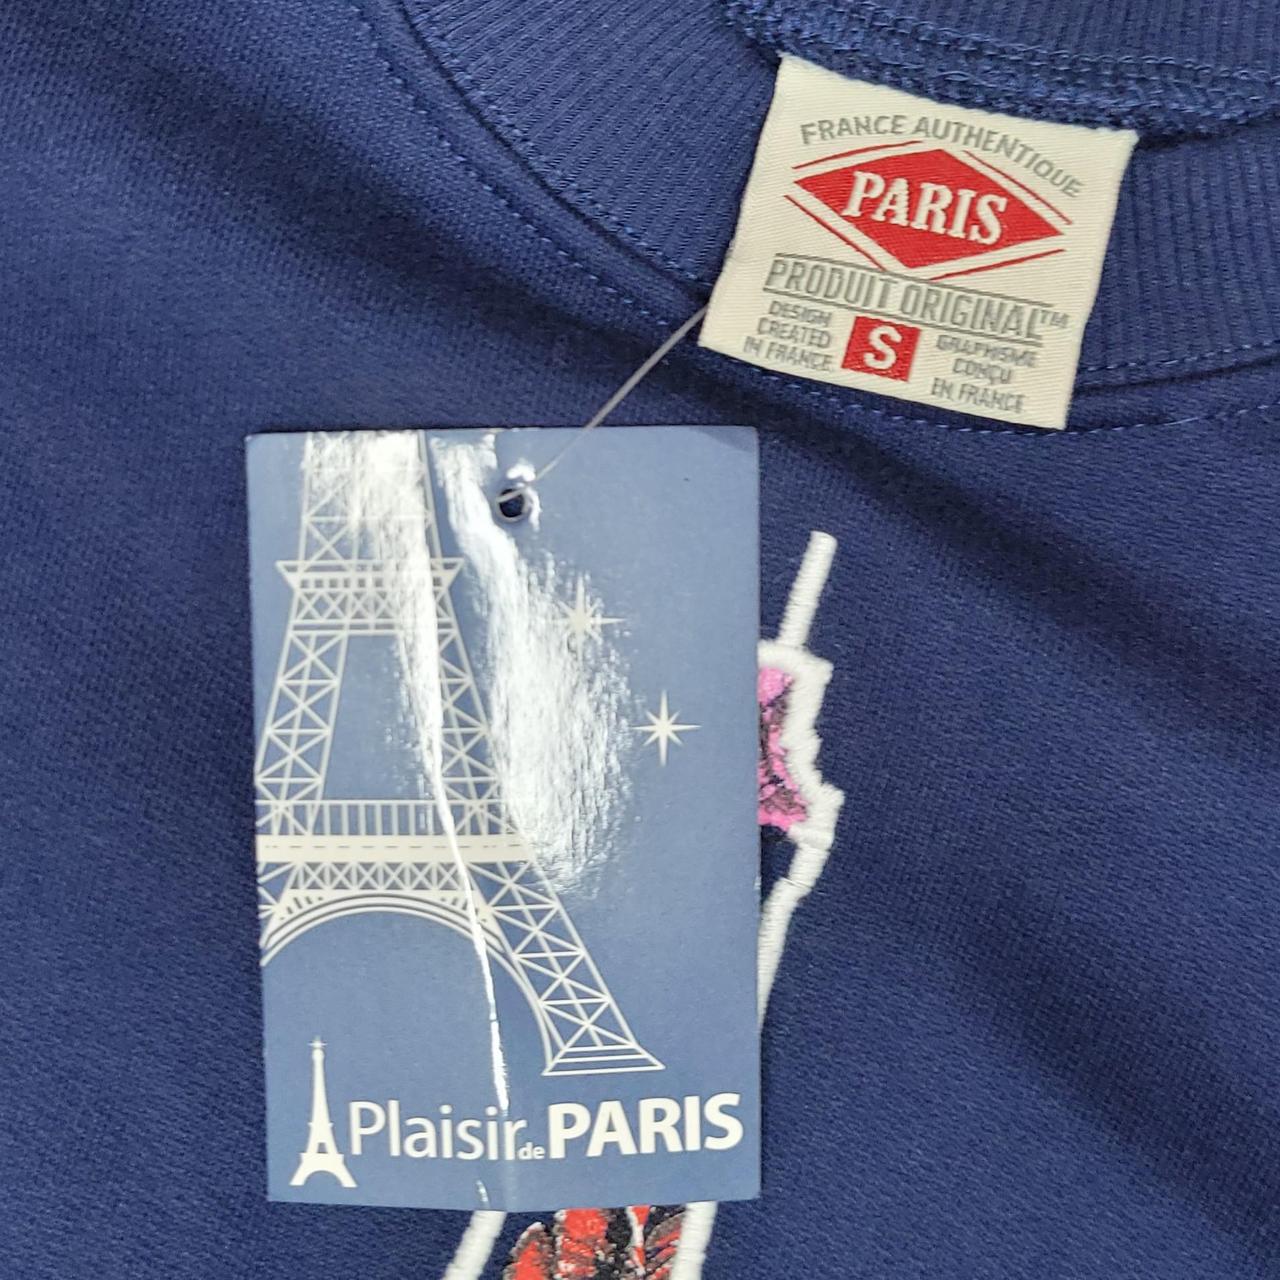 Product Image 3 - Eiffel Tower Paris crewneck

#pullover #sweatshirt